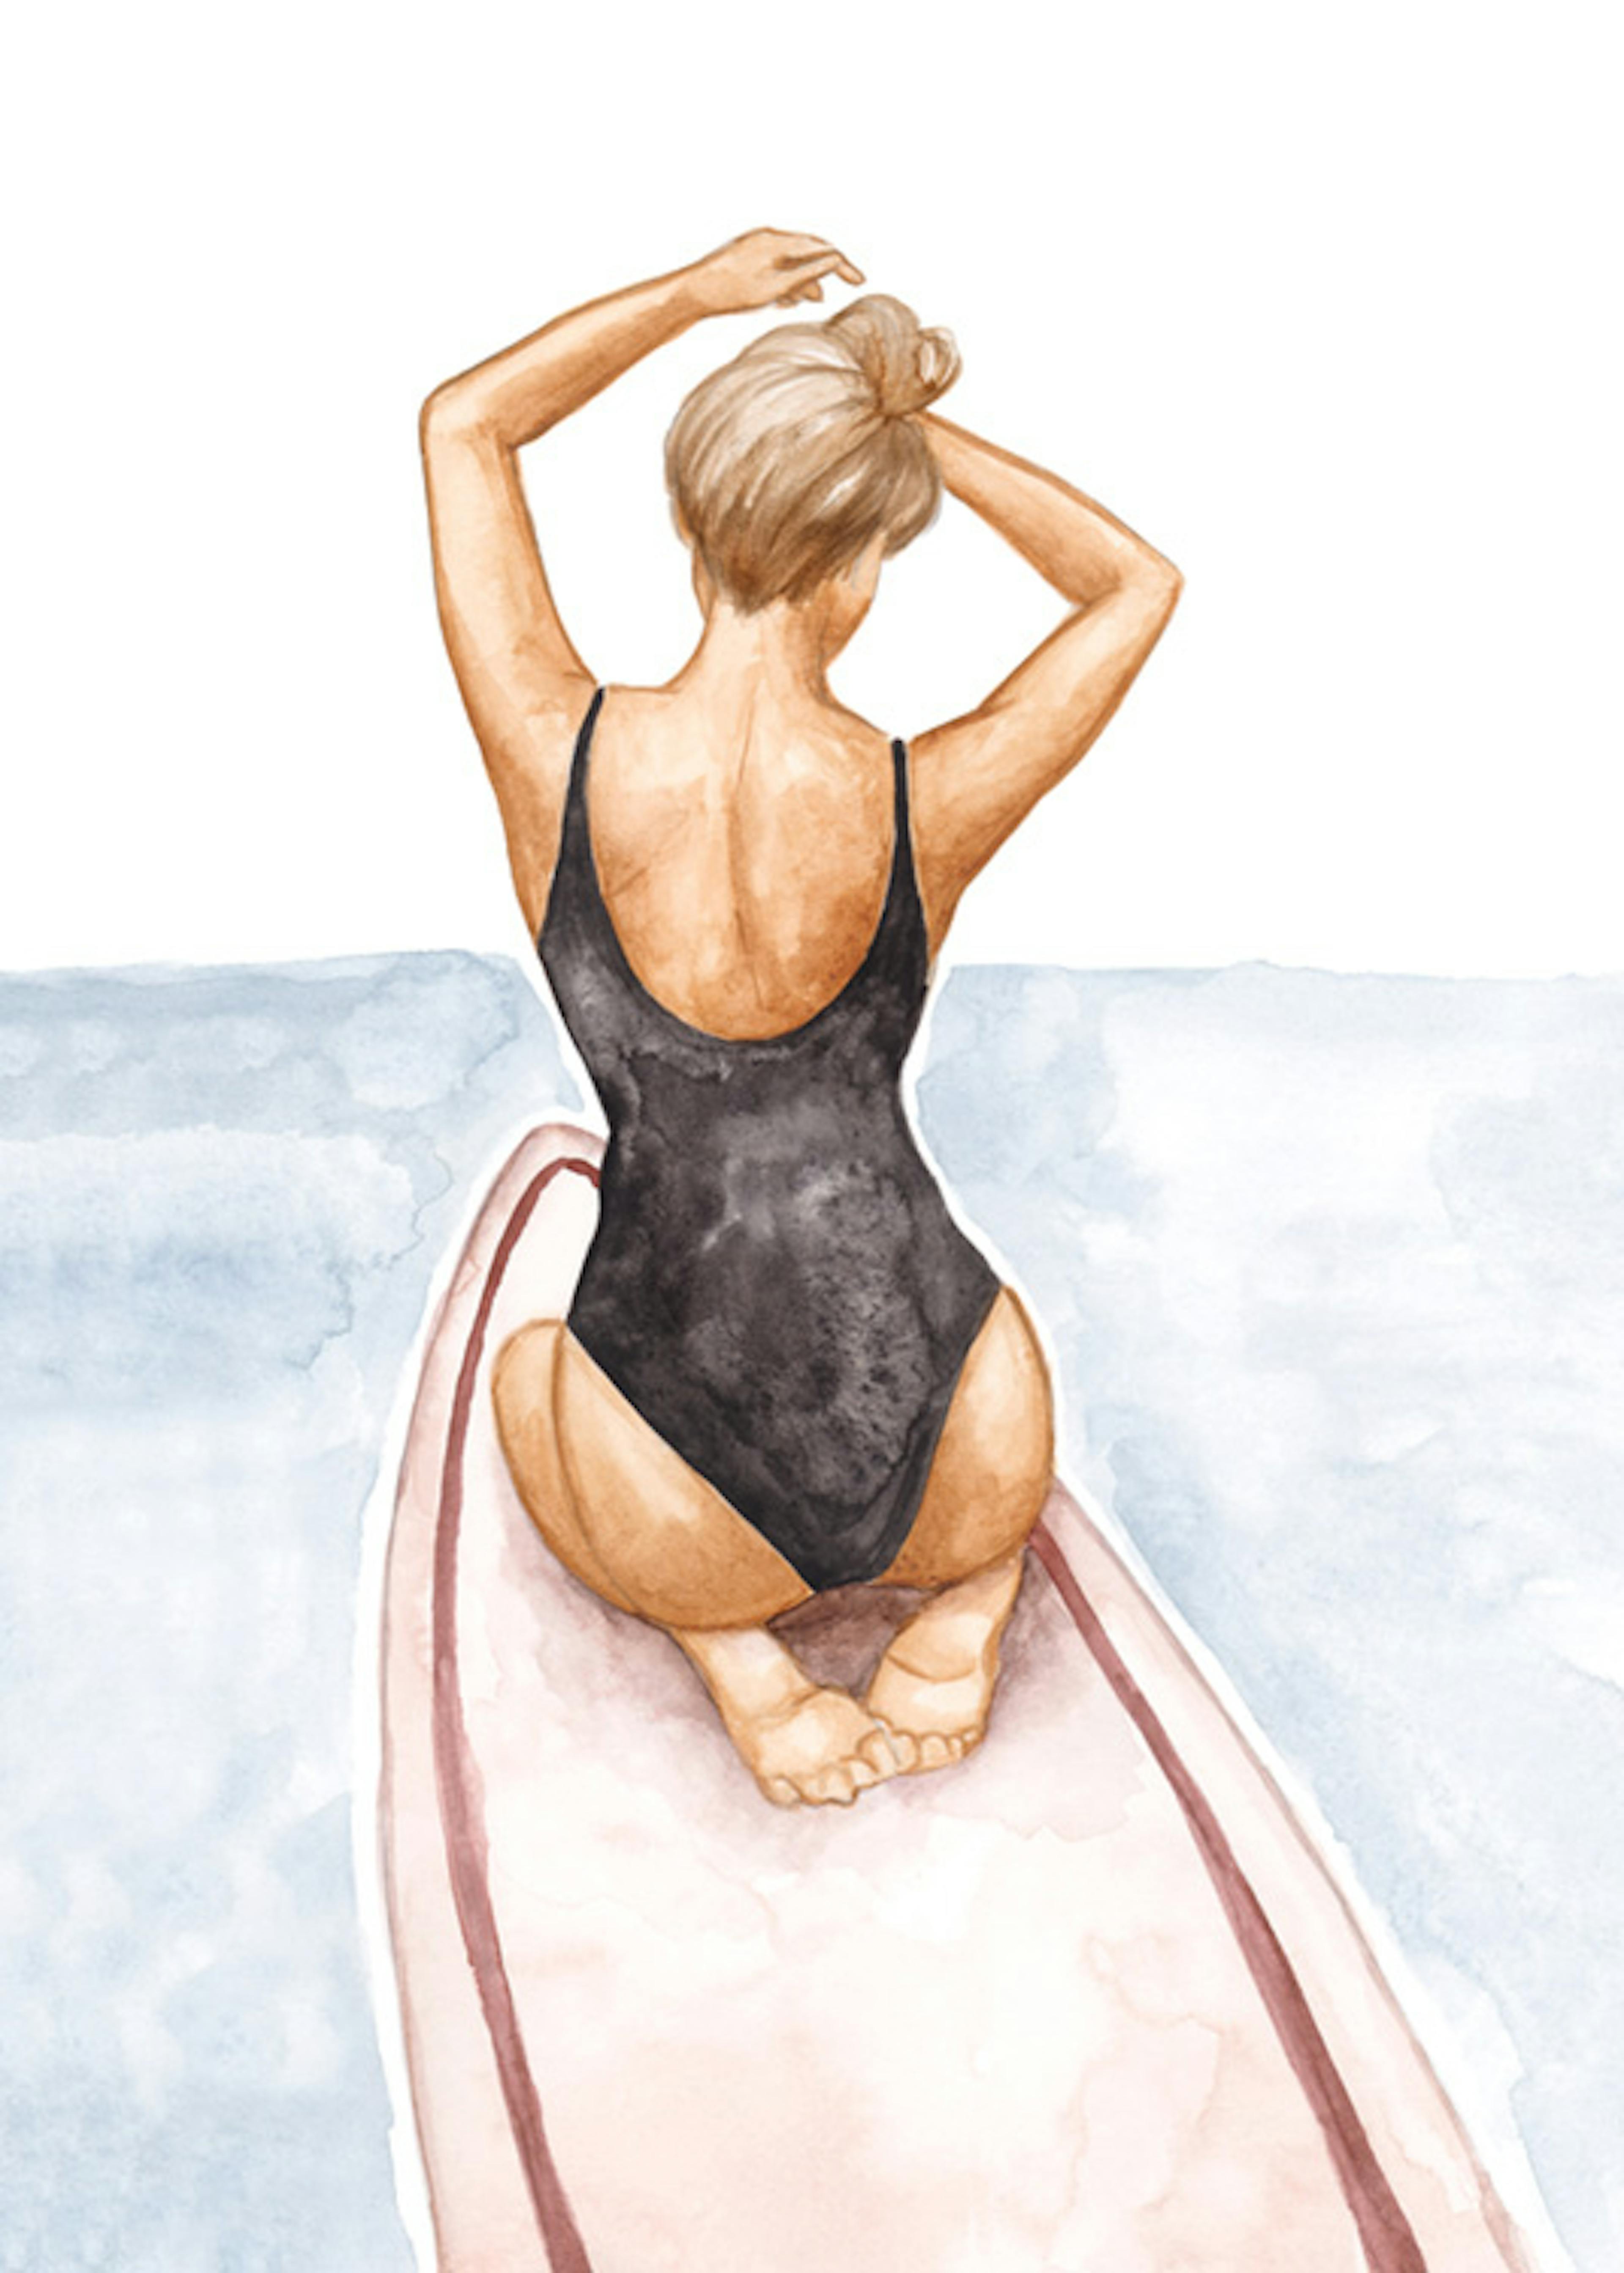 Watercolor Surfer Poster 0